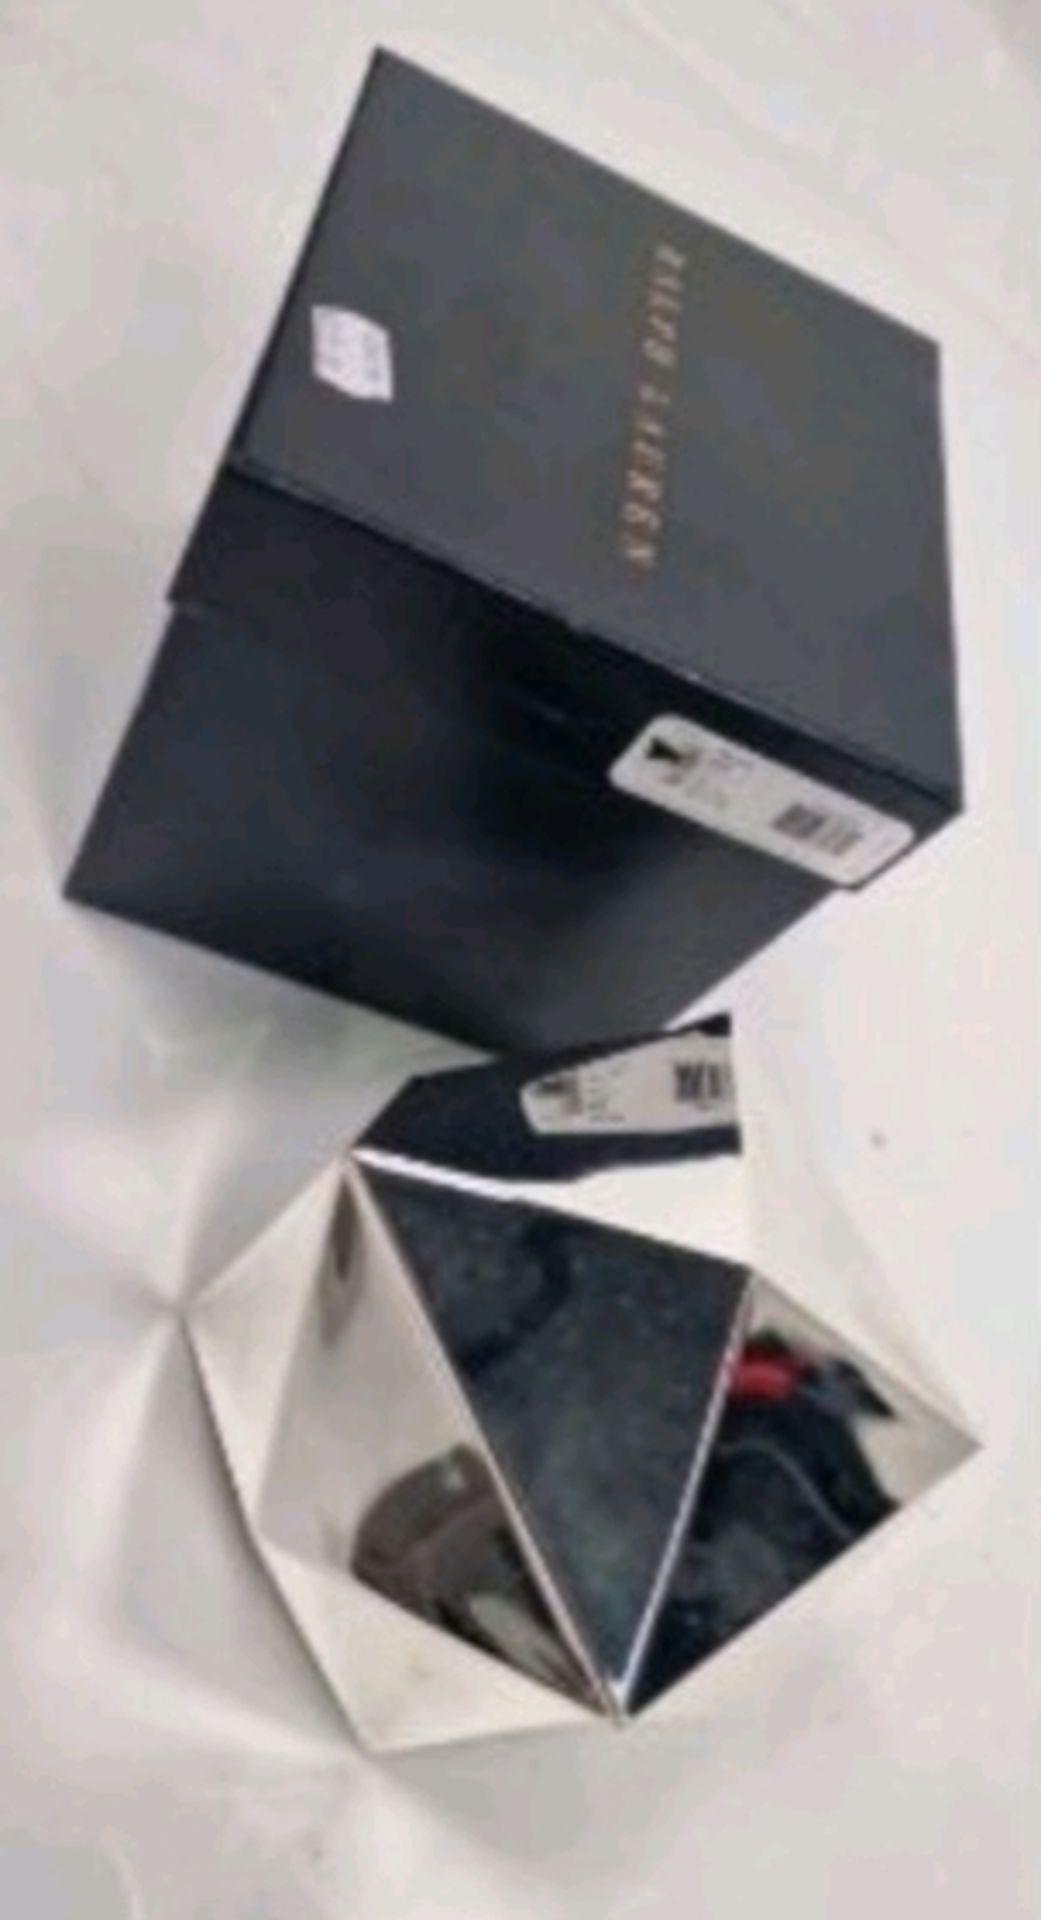 Ralph Lauren Raina Box Boite Caja - Image 4 of 5